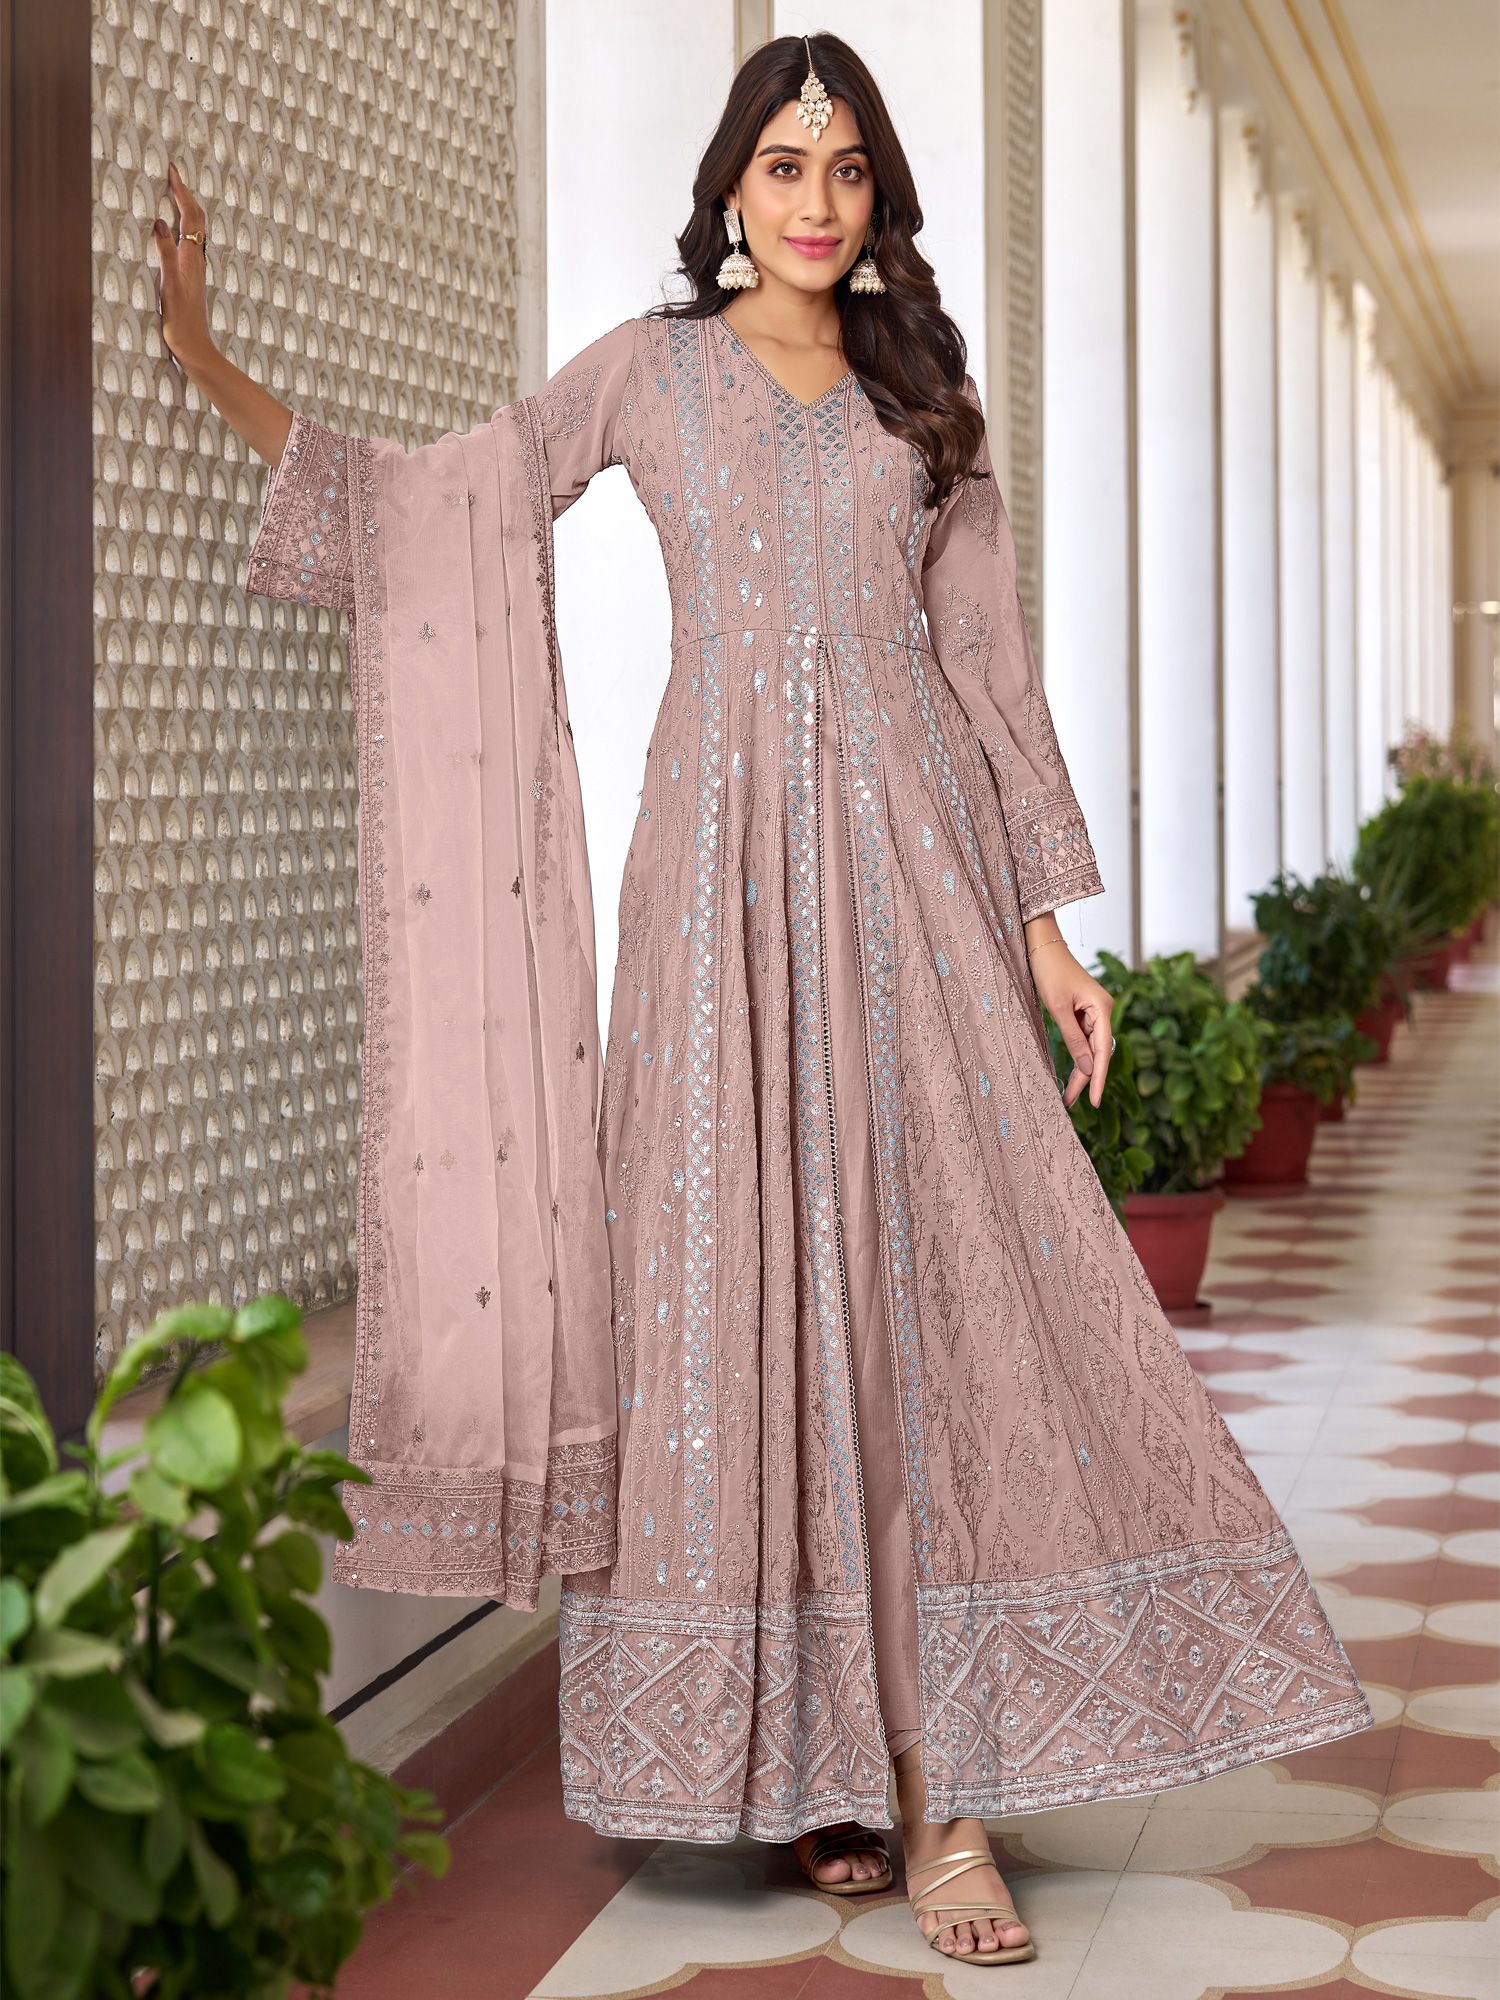 Pink Faux Georgette Heavy Thread Embroidery with Sequins Work Salwar Kameez  at Rs 6415.00 | Georgette Salwar Kameez | ID: 2852502458688